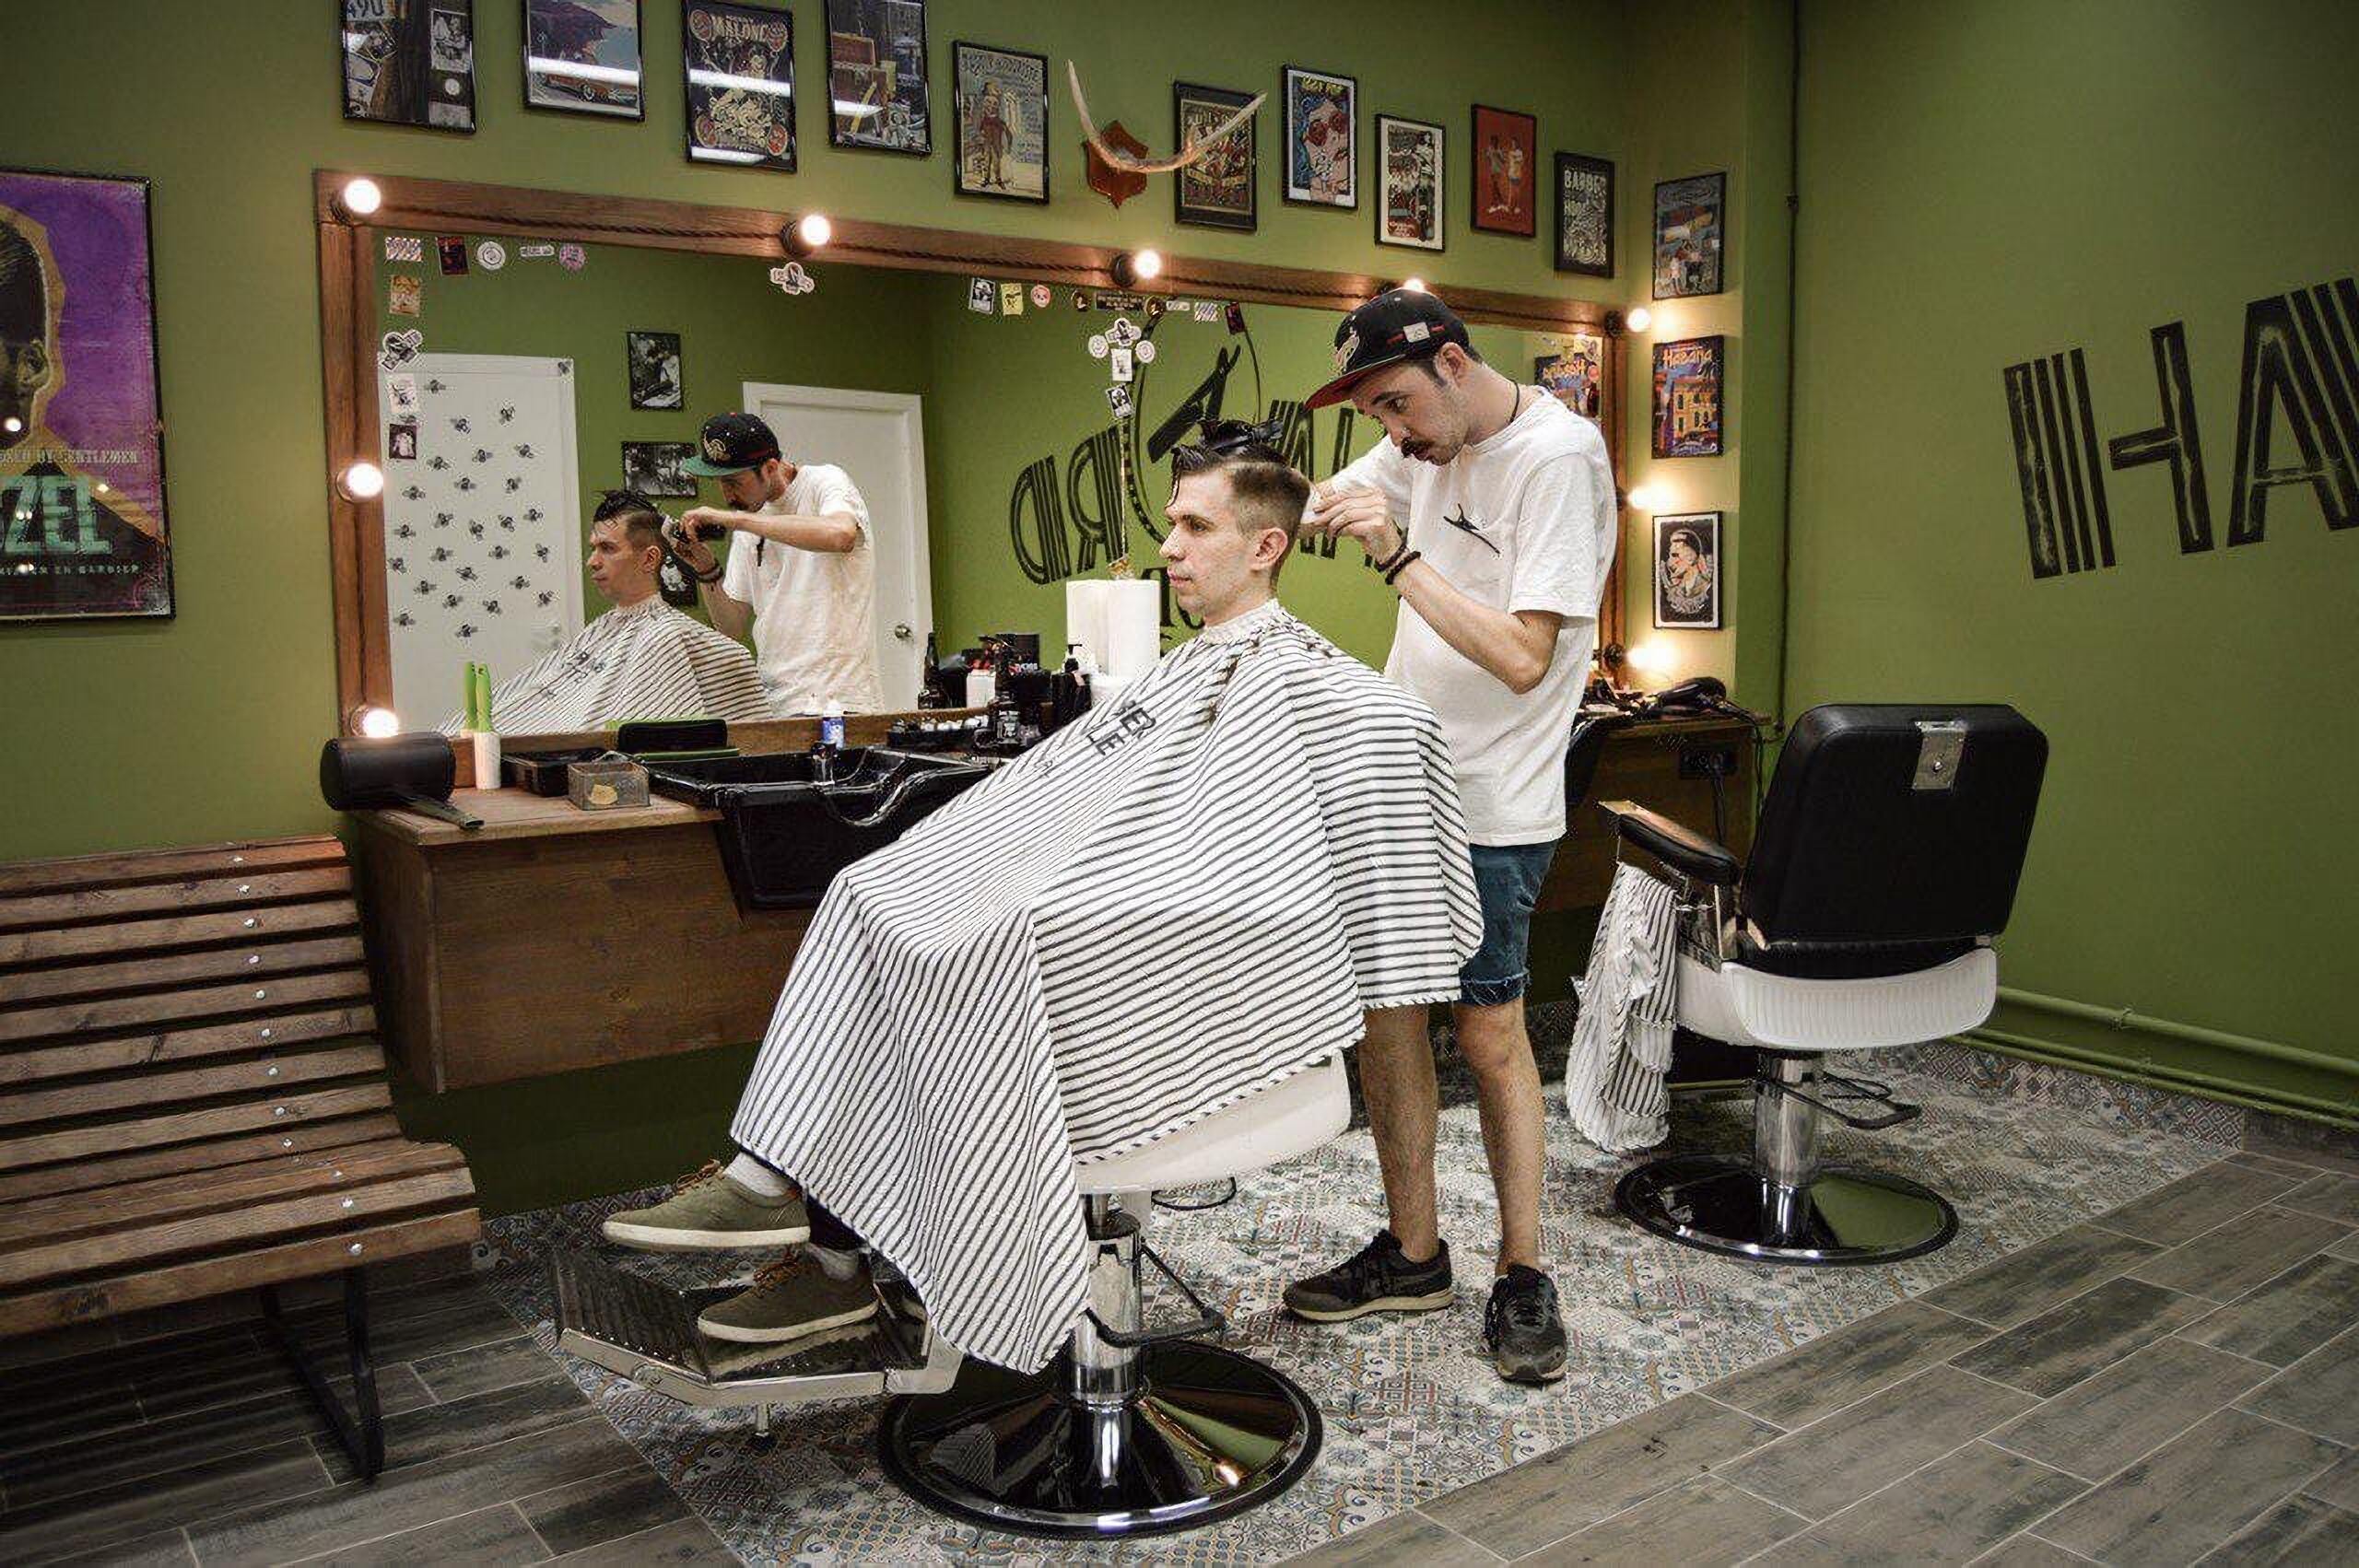 Barber Shops offer various treatment options